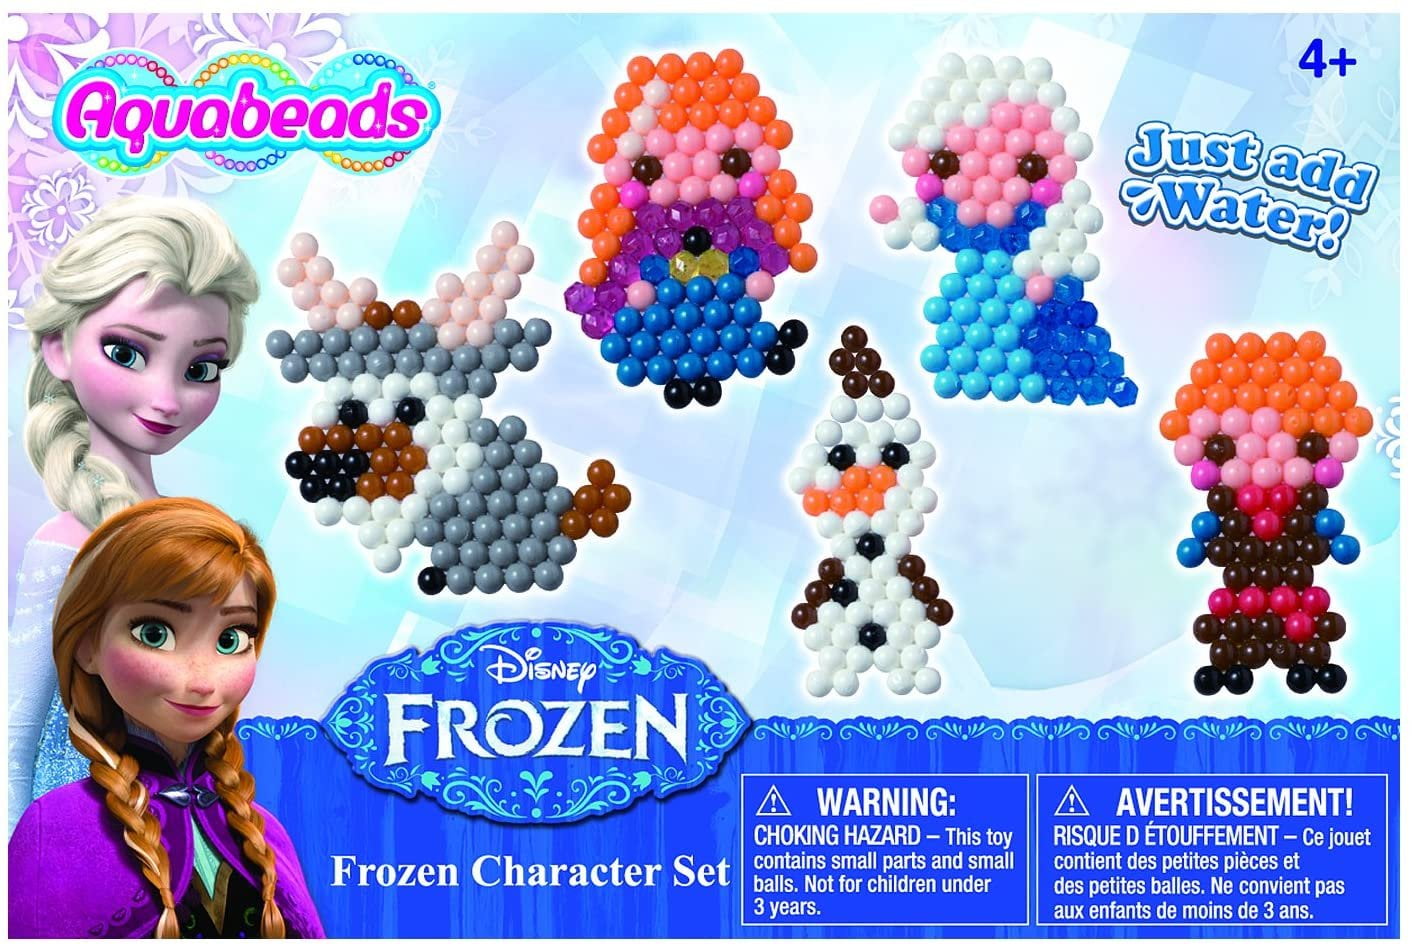 Aquabeads Disney Frozen II Character Set